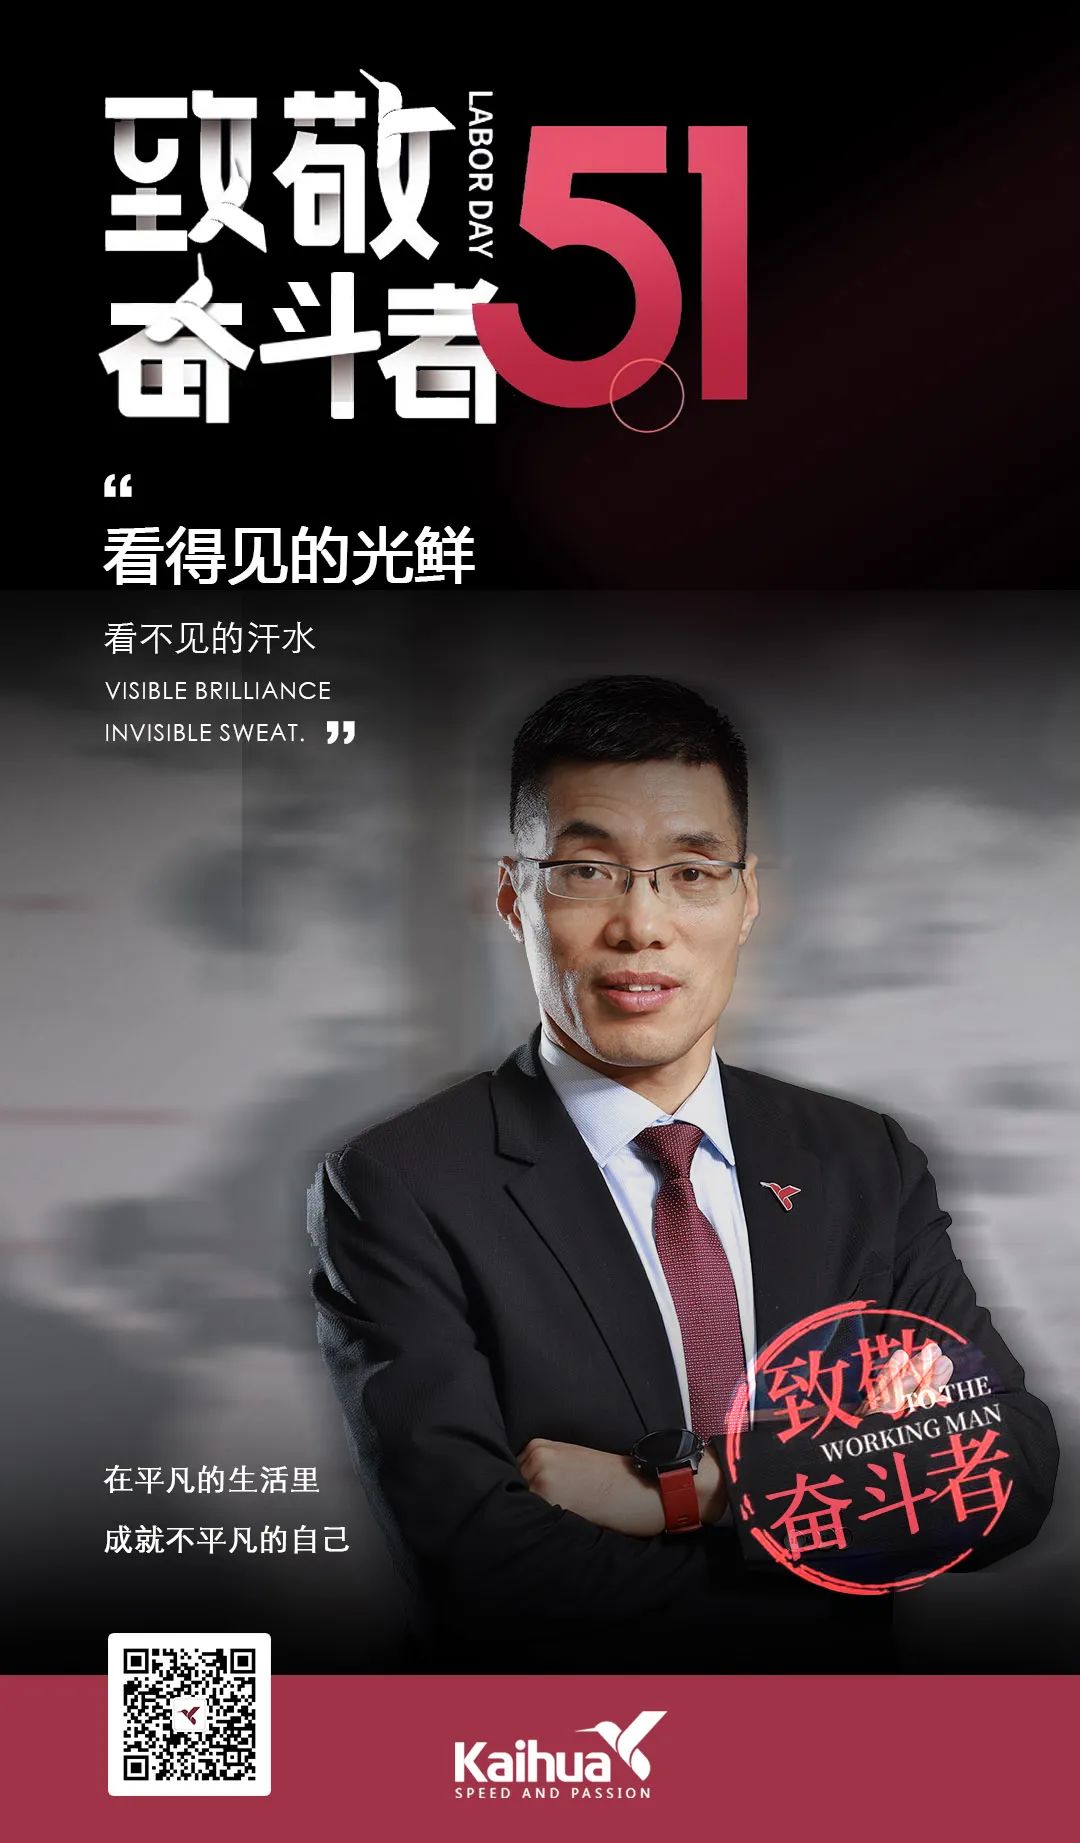 KAIHUA သတင်း |ရုန်းကန်သူများကို ဂုဏ်ပြုခြင်း ①: Liang Zhenghua |မြင်သာအောင် ထက်မြက်မှု၊ မမြင်နိုင်သော ချွေး